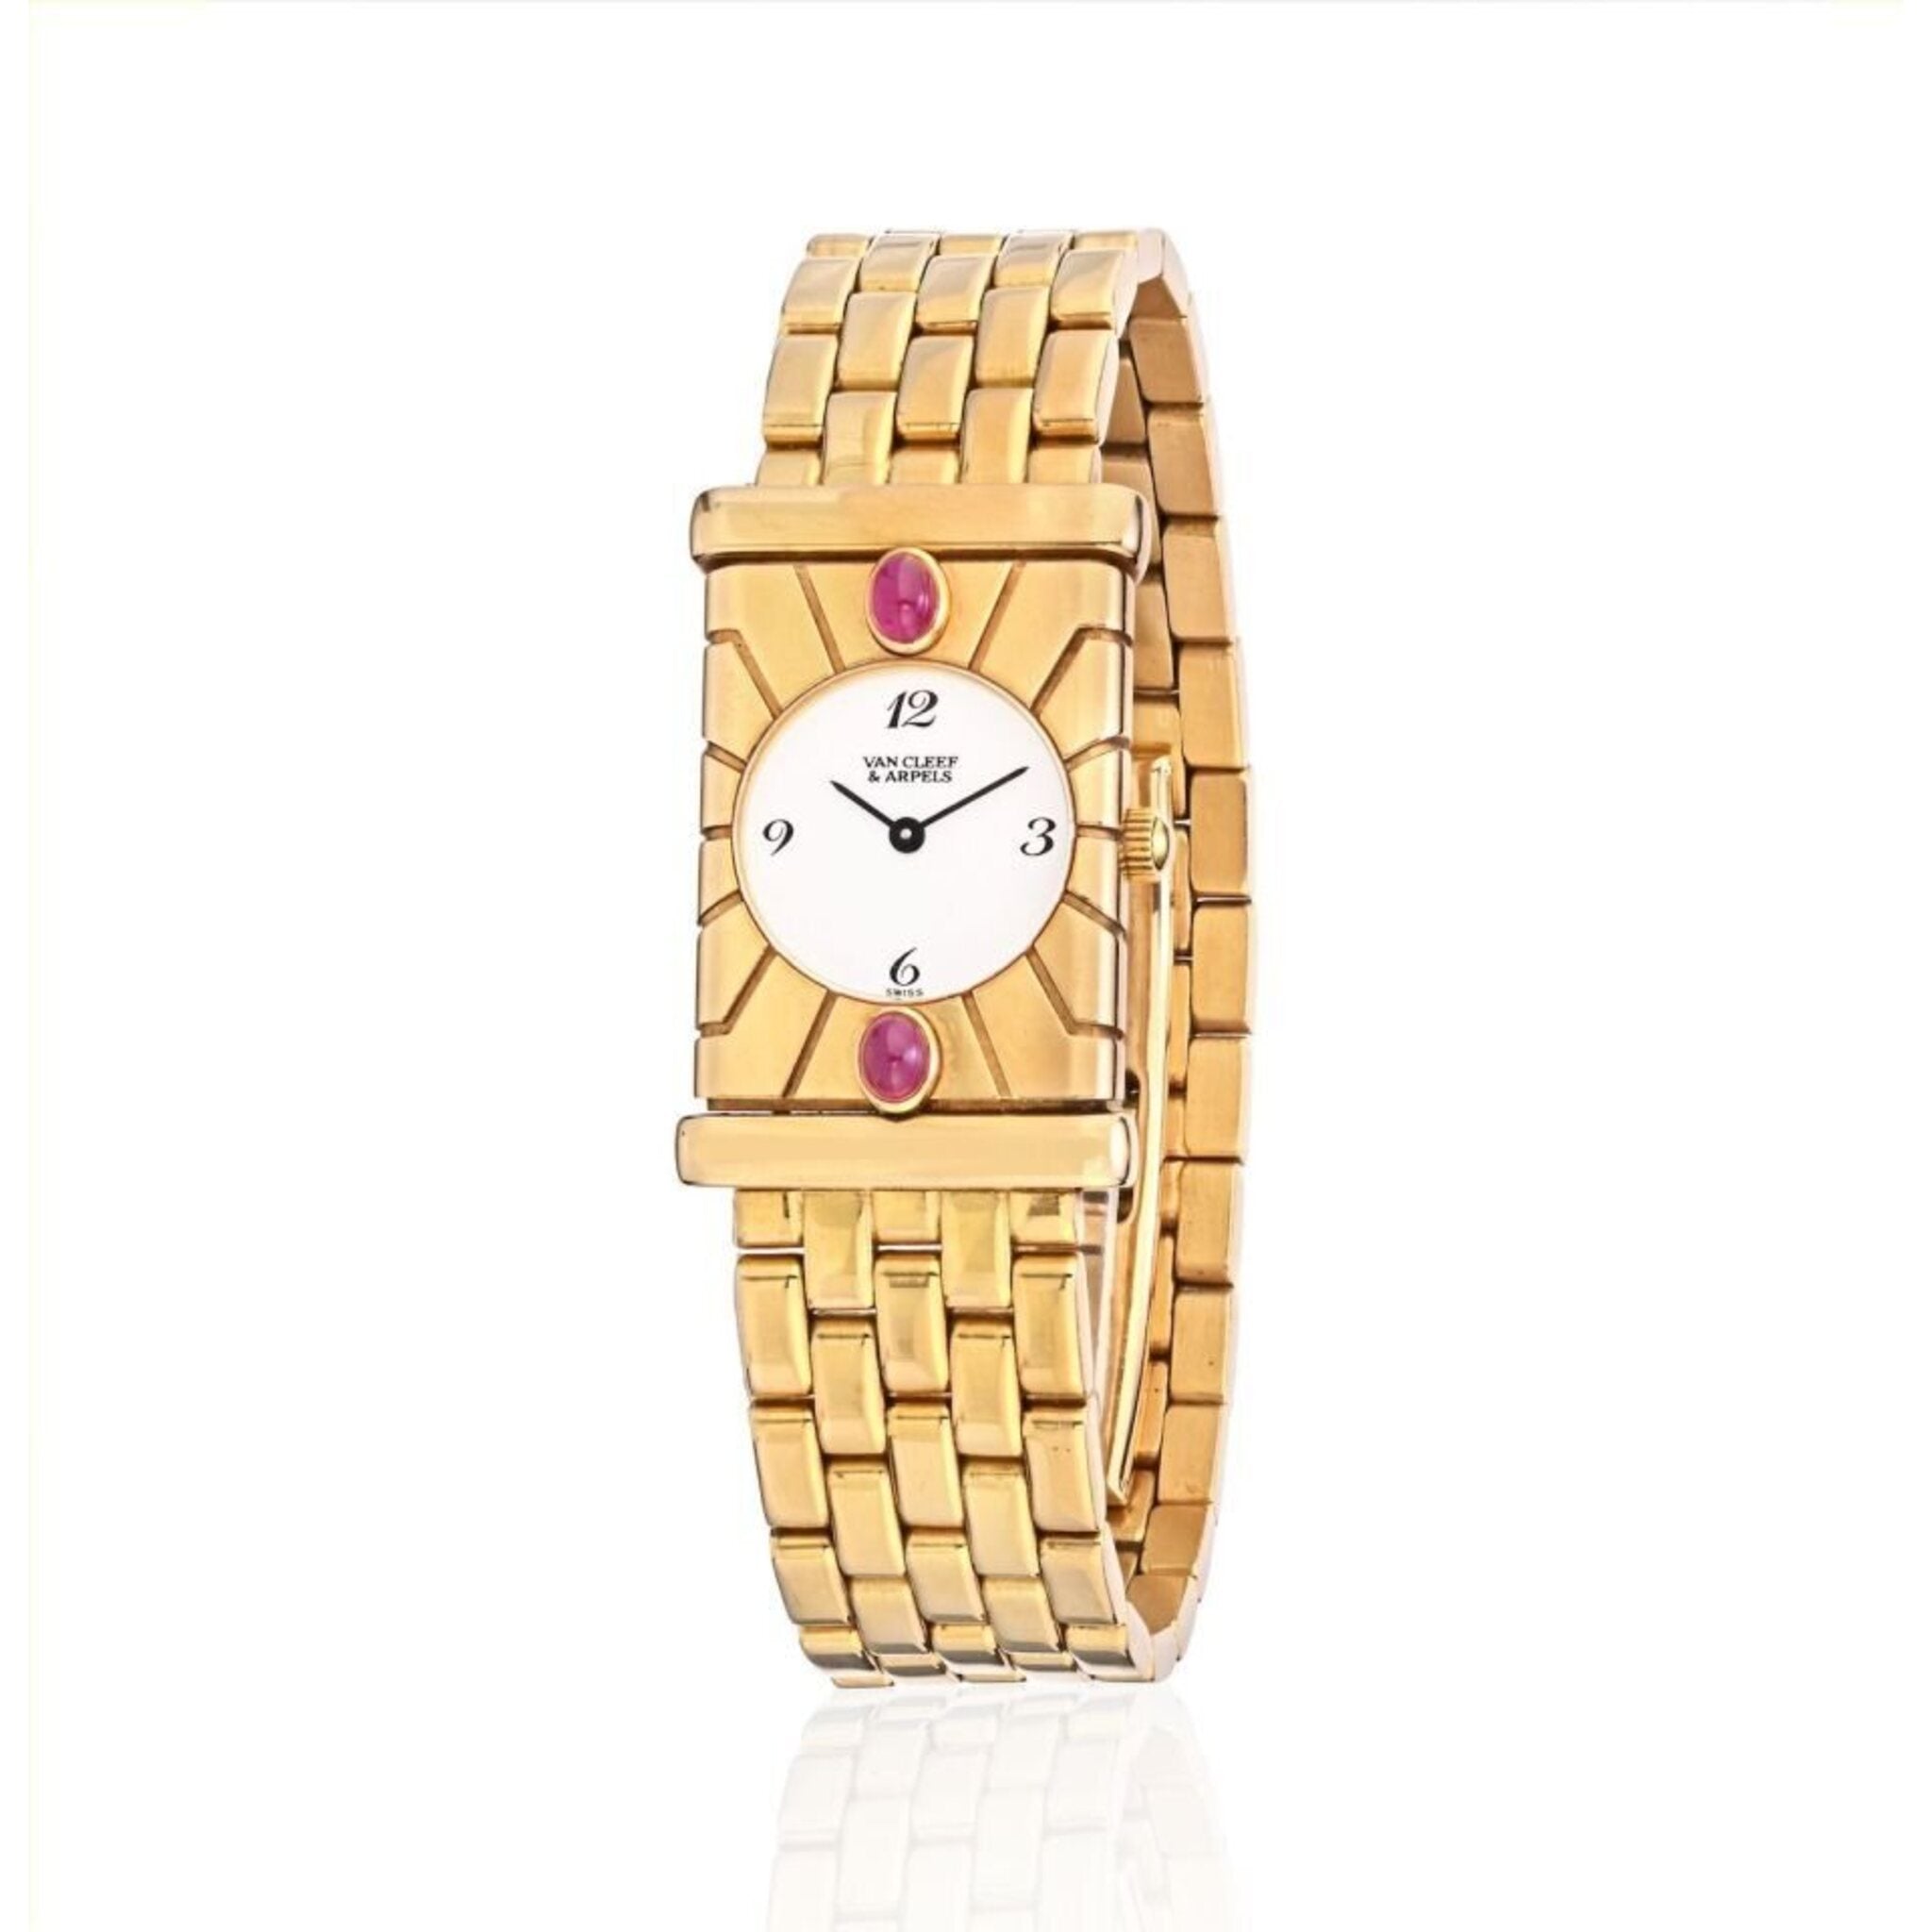 Watch Rolex Cellini Wrist Watch - Ref. 3811 Swiss Vintage Manual - Gold 18K  750 | eBay